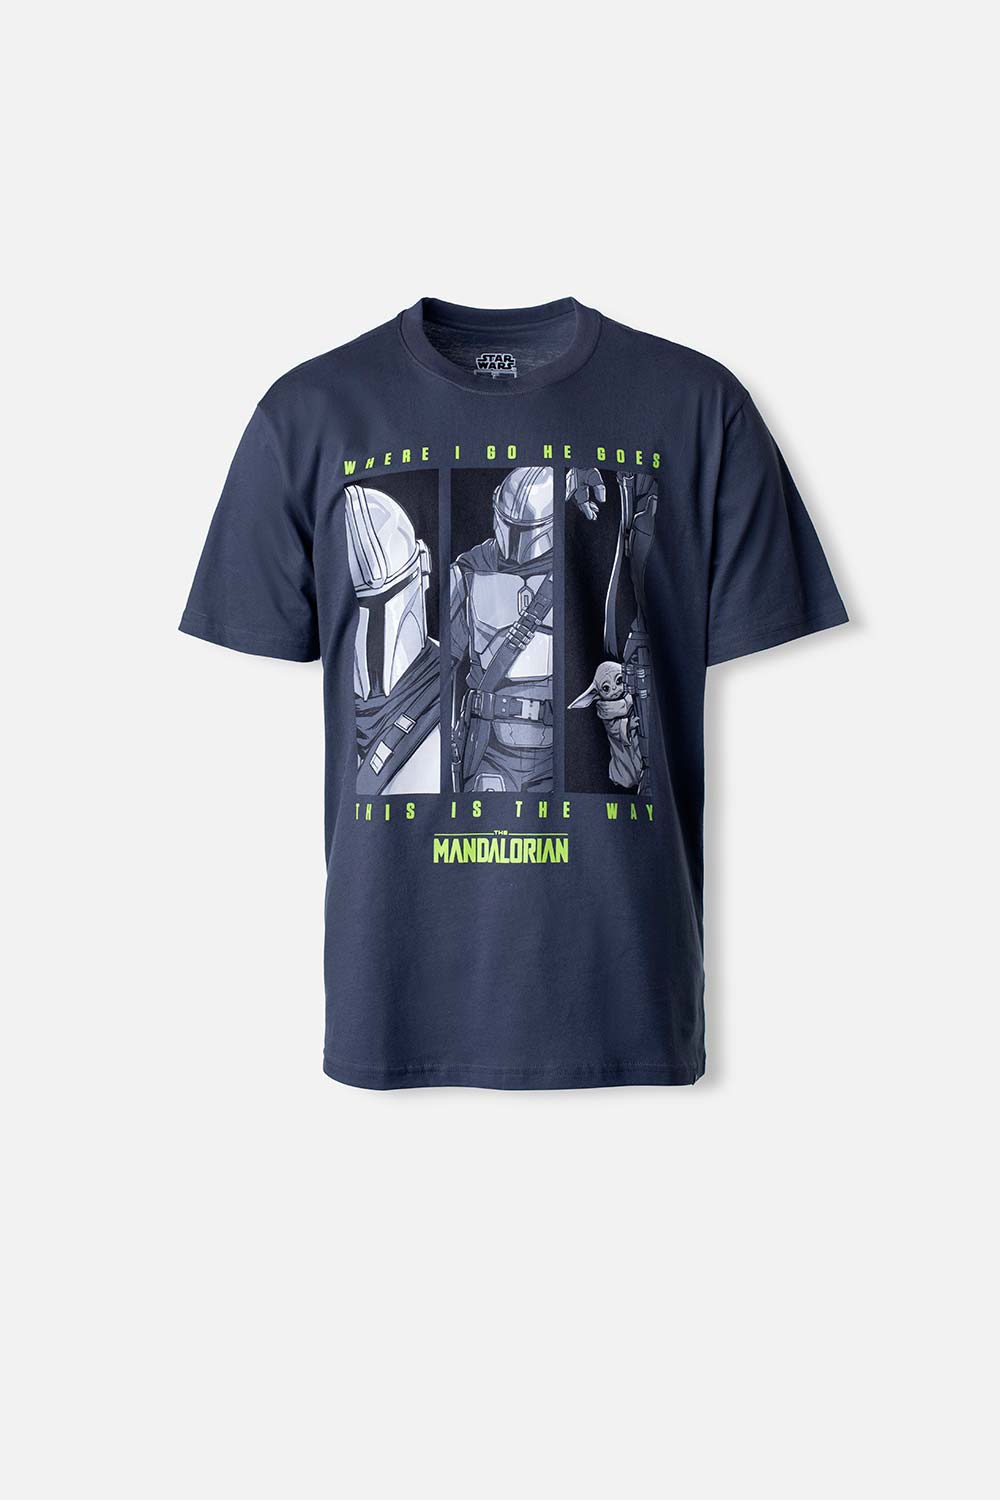 Camiseta de Mandalorian manga corta gris grafito para hombre M-0